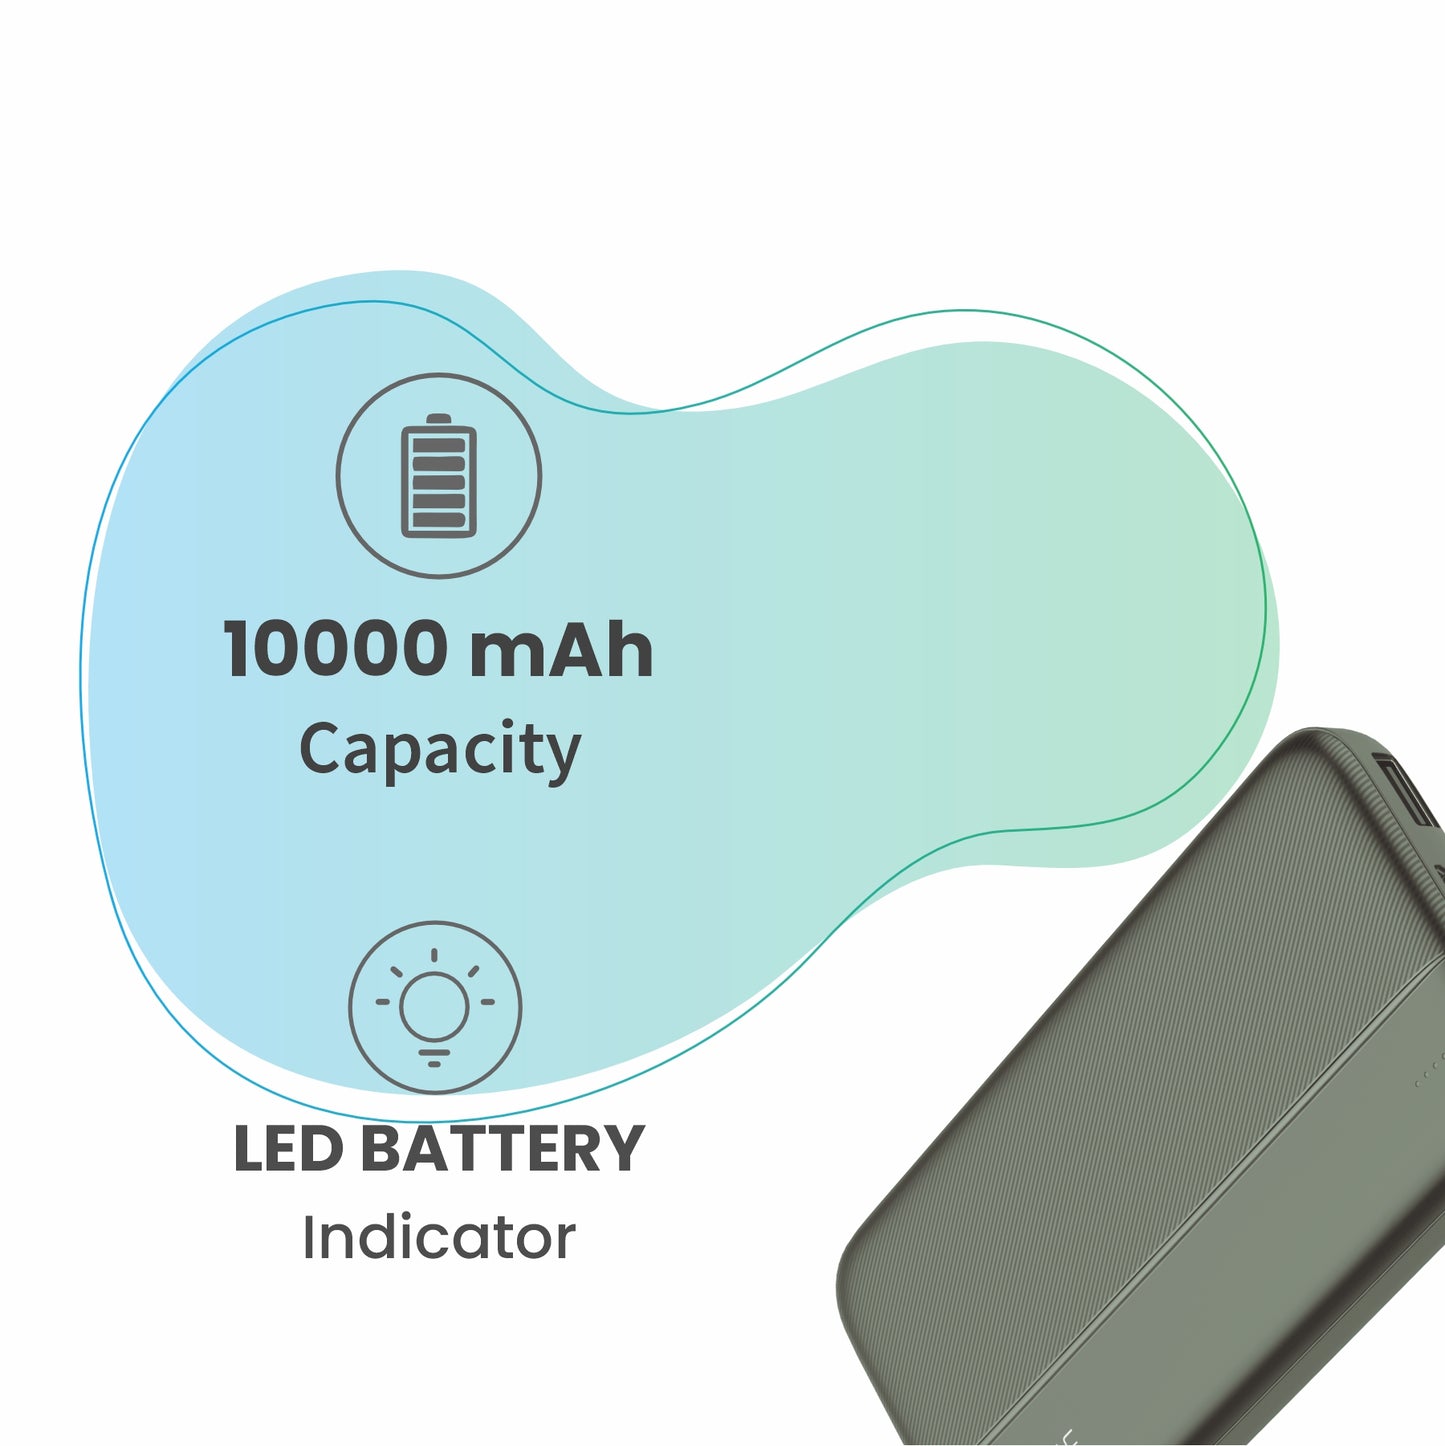 LYNE Powerbox 6  10K mAh Battery Capacity, Dual USB Port, 46 Hours of Extra Backup, LED Battery Indicator